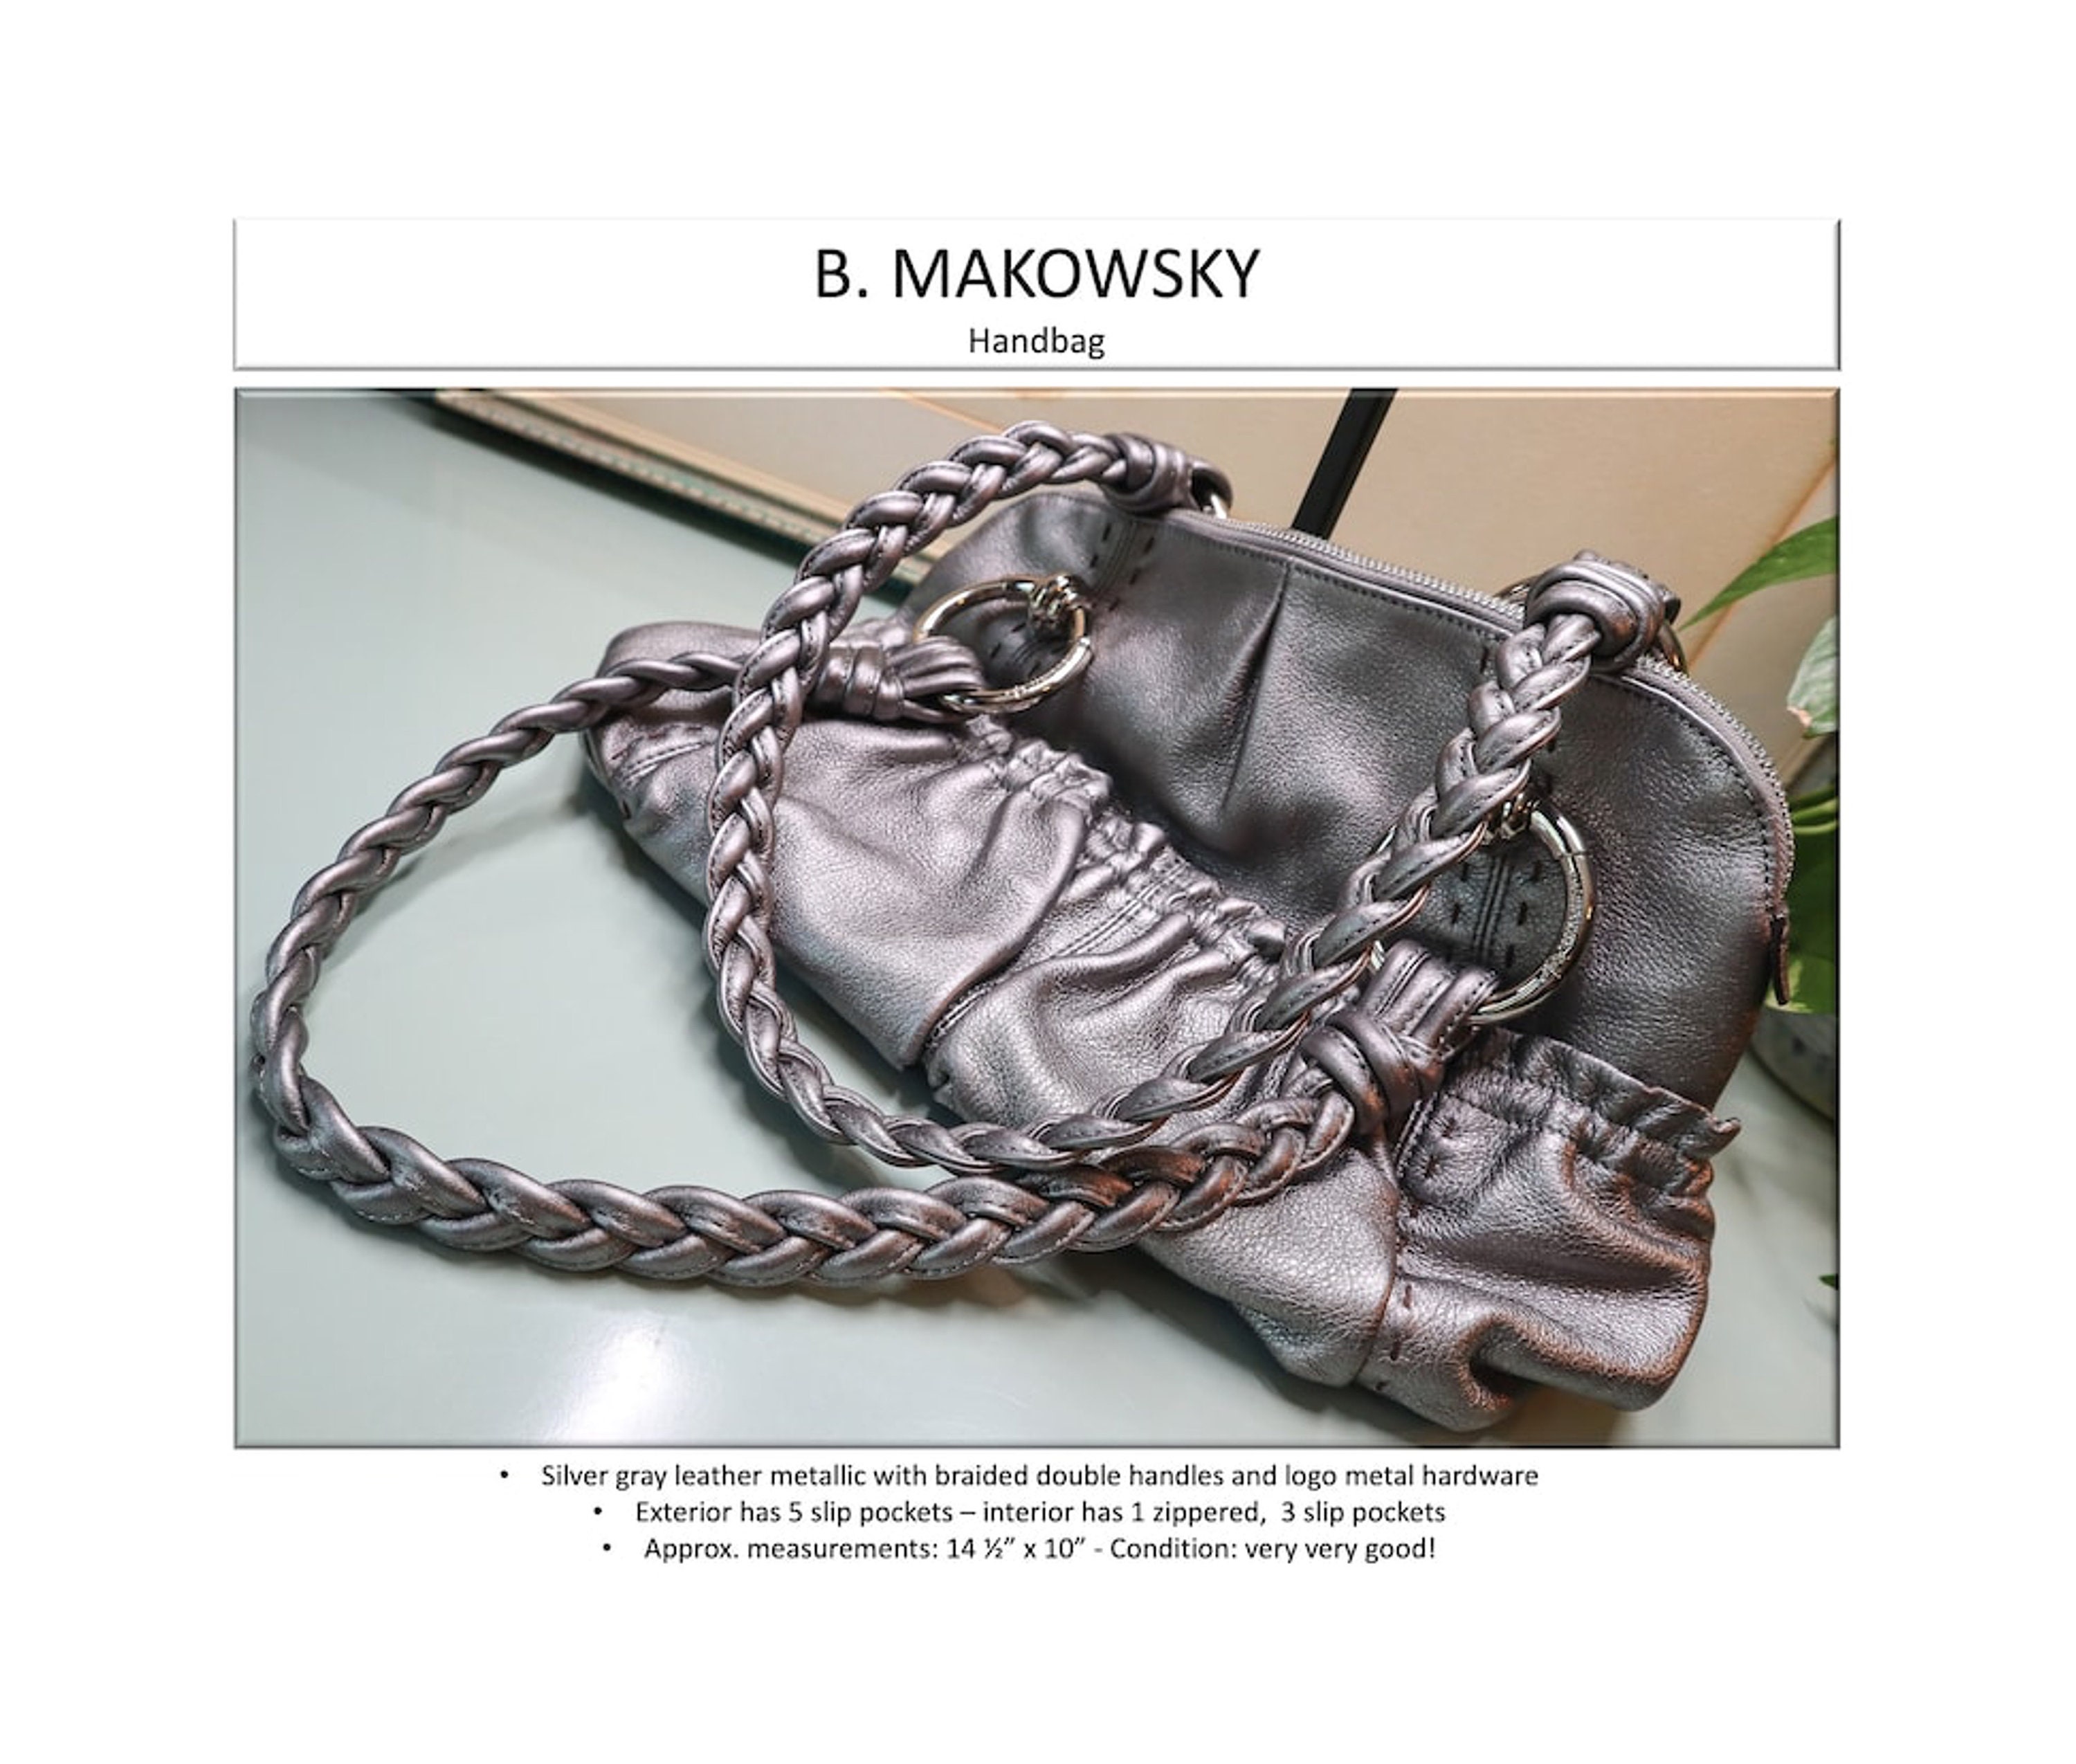 B Makowsky Silver Tote Bag Purse W/Dust Jacket Leather | eBay